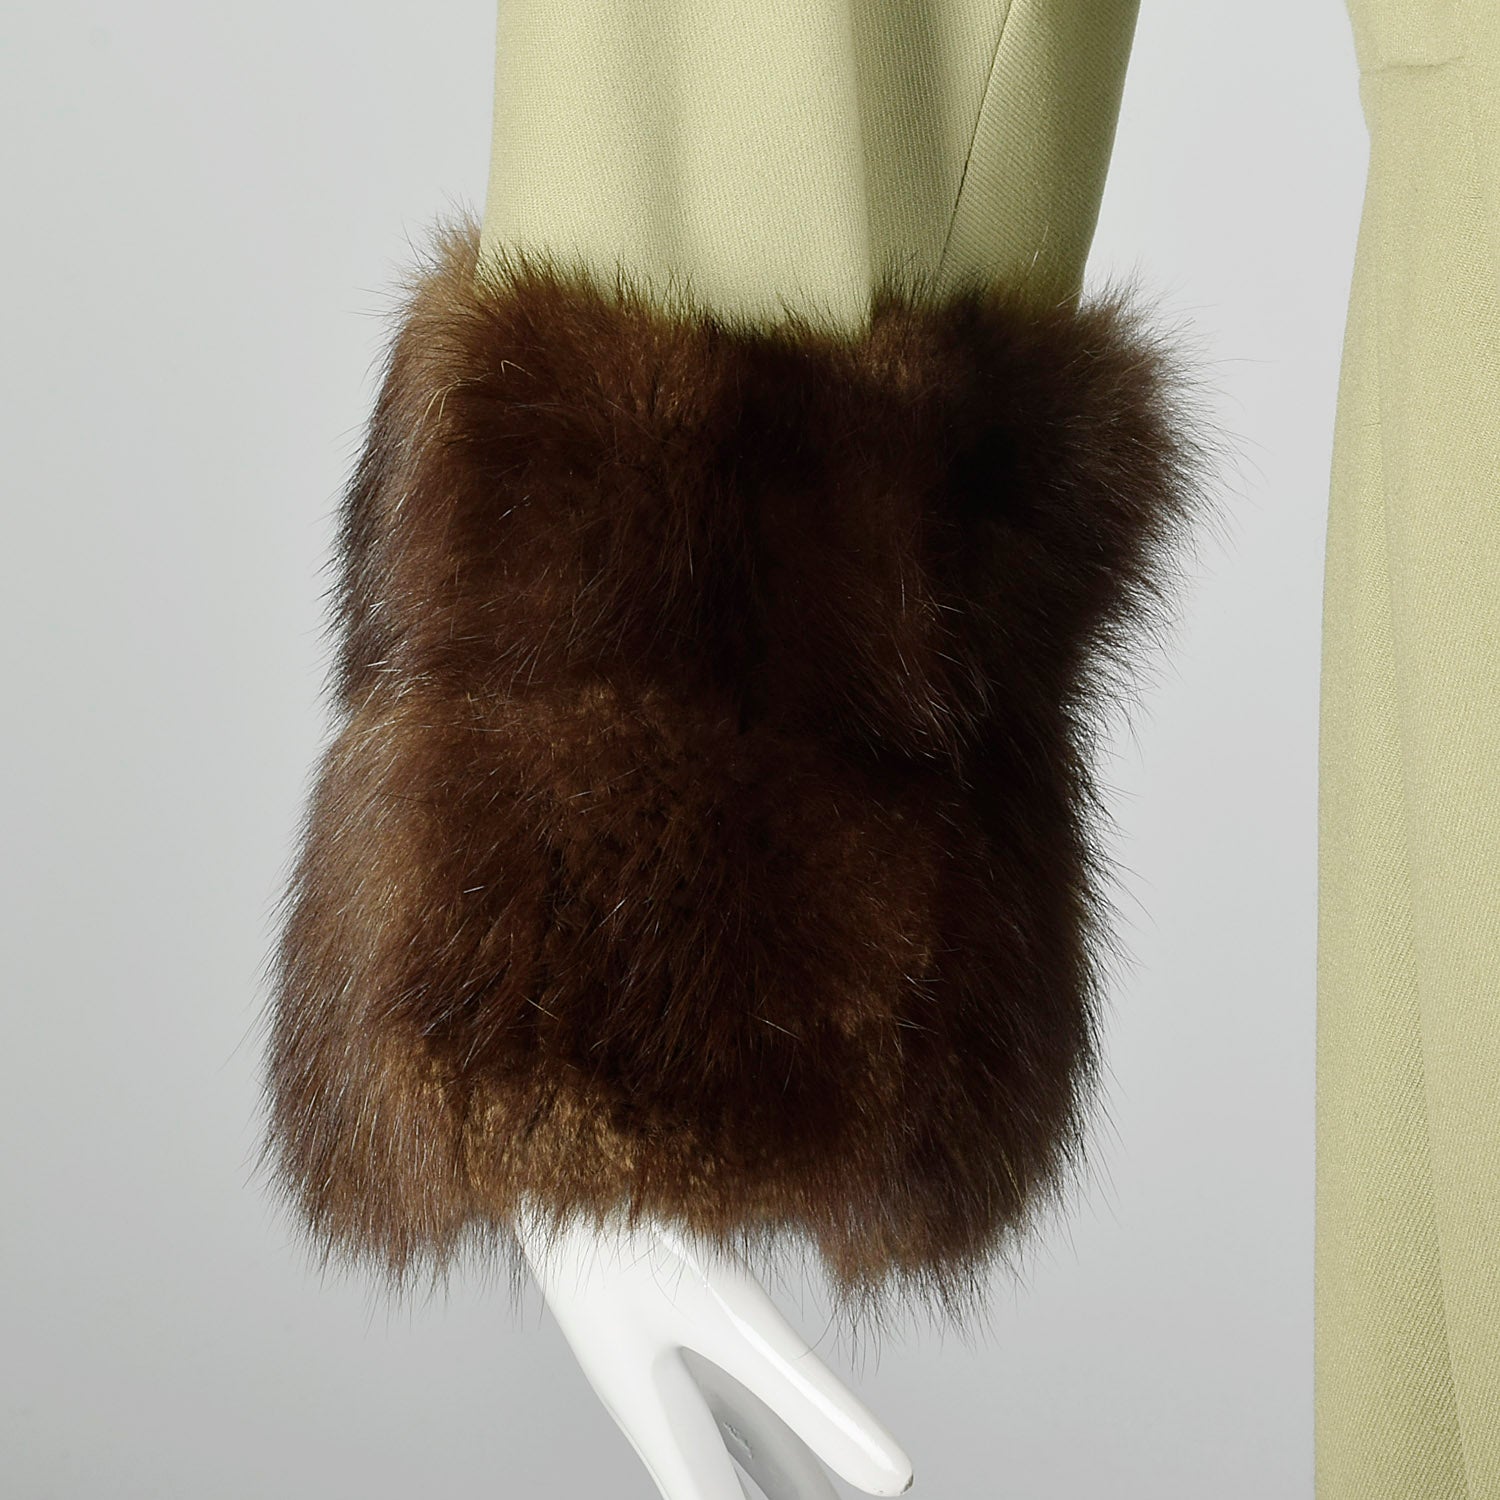 XS 1940s Pistachio Green Wool Coat with Fox Trim